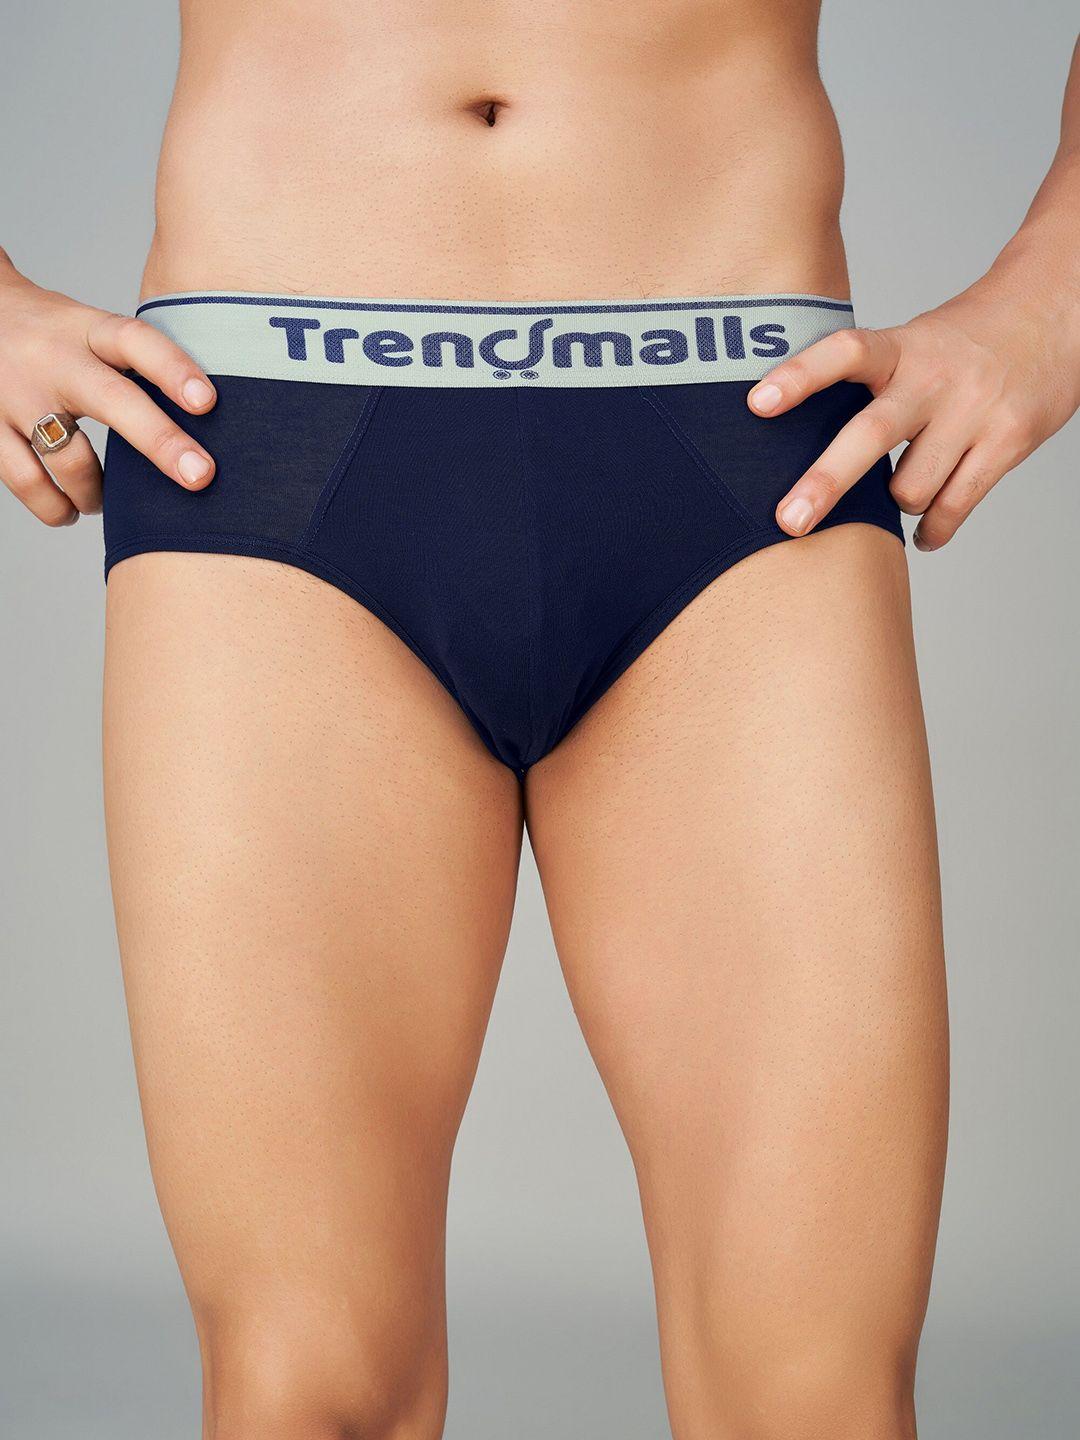 trendmalls brand logo printed 4-way stretch modal basic brief tm-mu01-navy blue-s